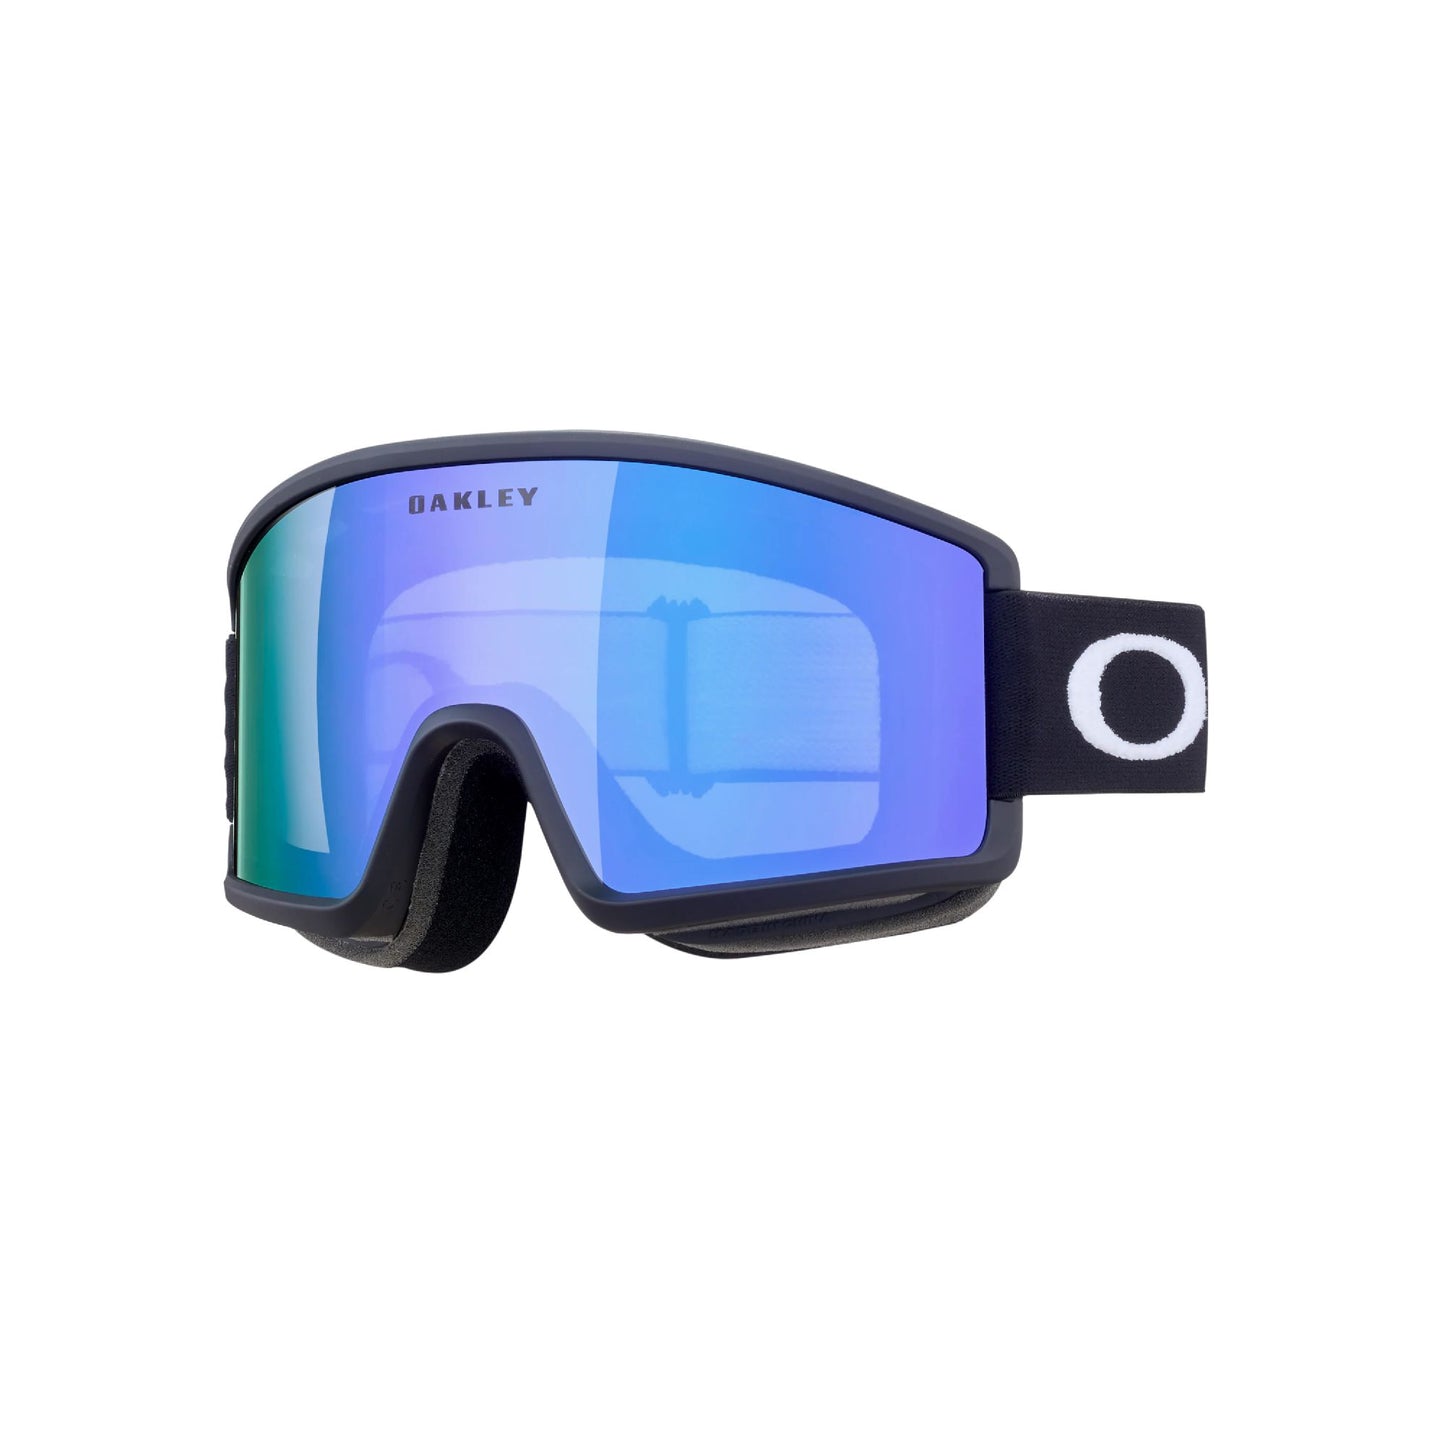 Oakley Target Line M Snow Goggles Matte Black / Violet Iridium Snow Goggles